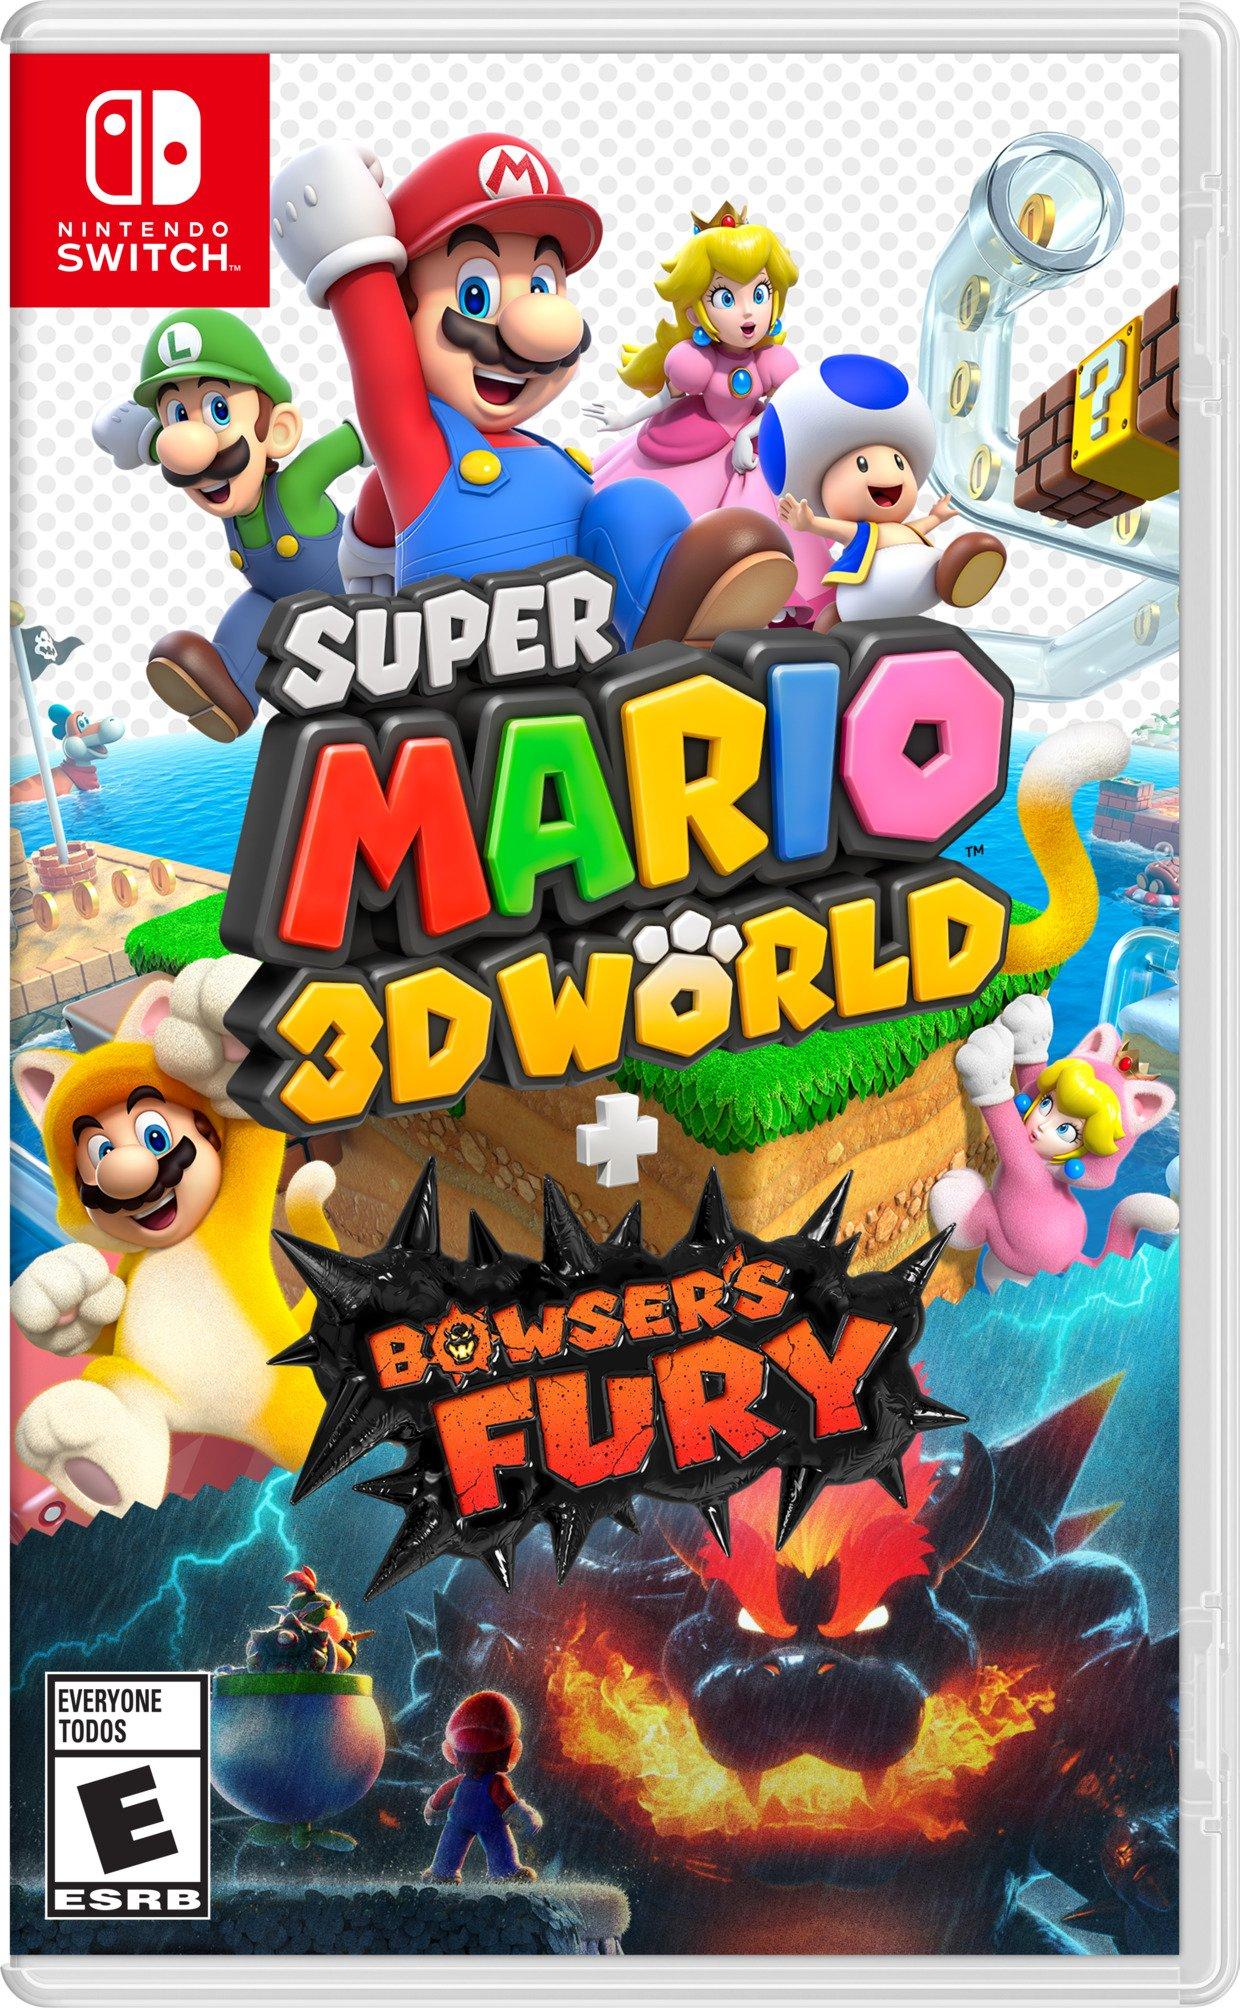 Super Mario 3D World Plus Bowser's Fury - Nintendo Switch $29.94